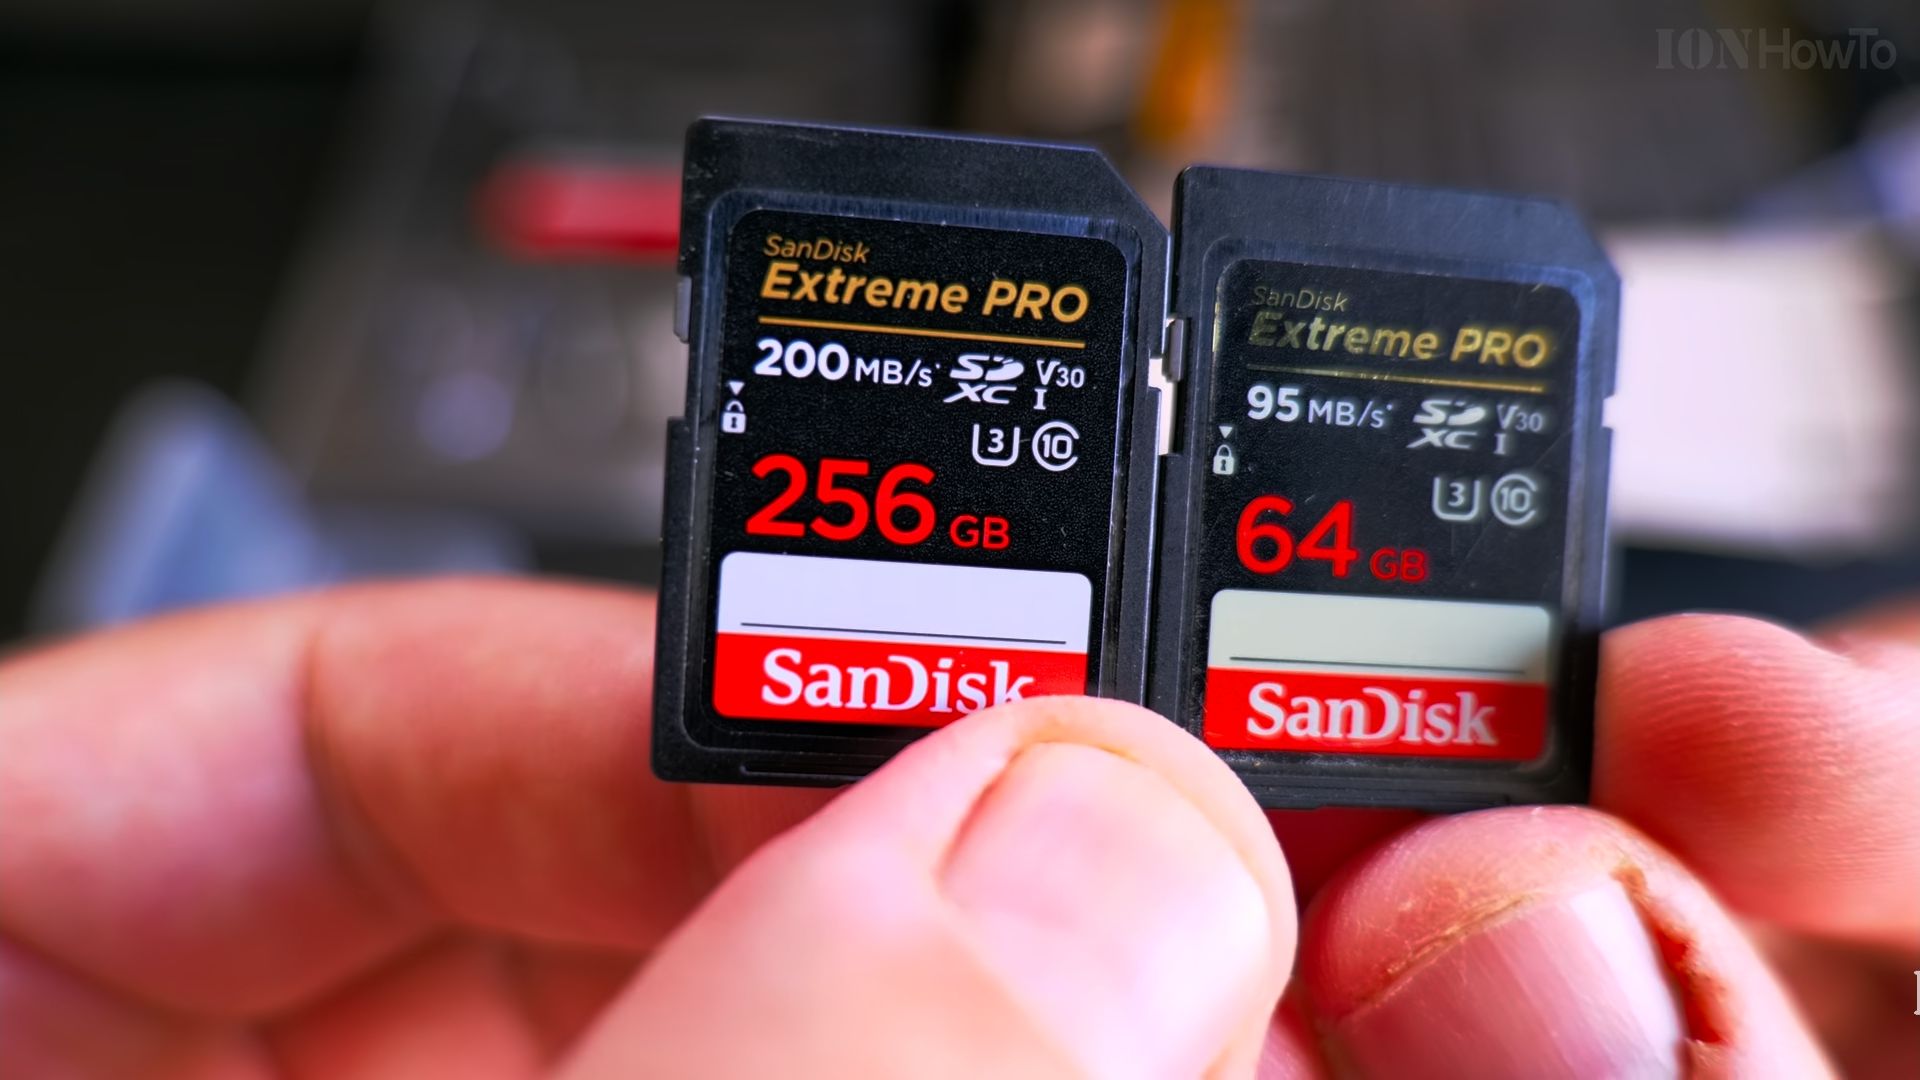 SanDisk Extreme Pro 200MBs vs 95MBs Speed Test